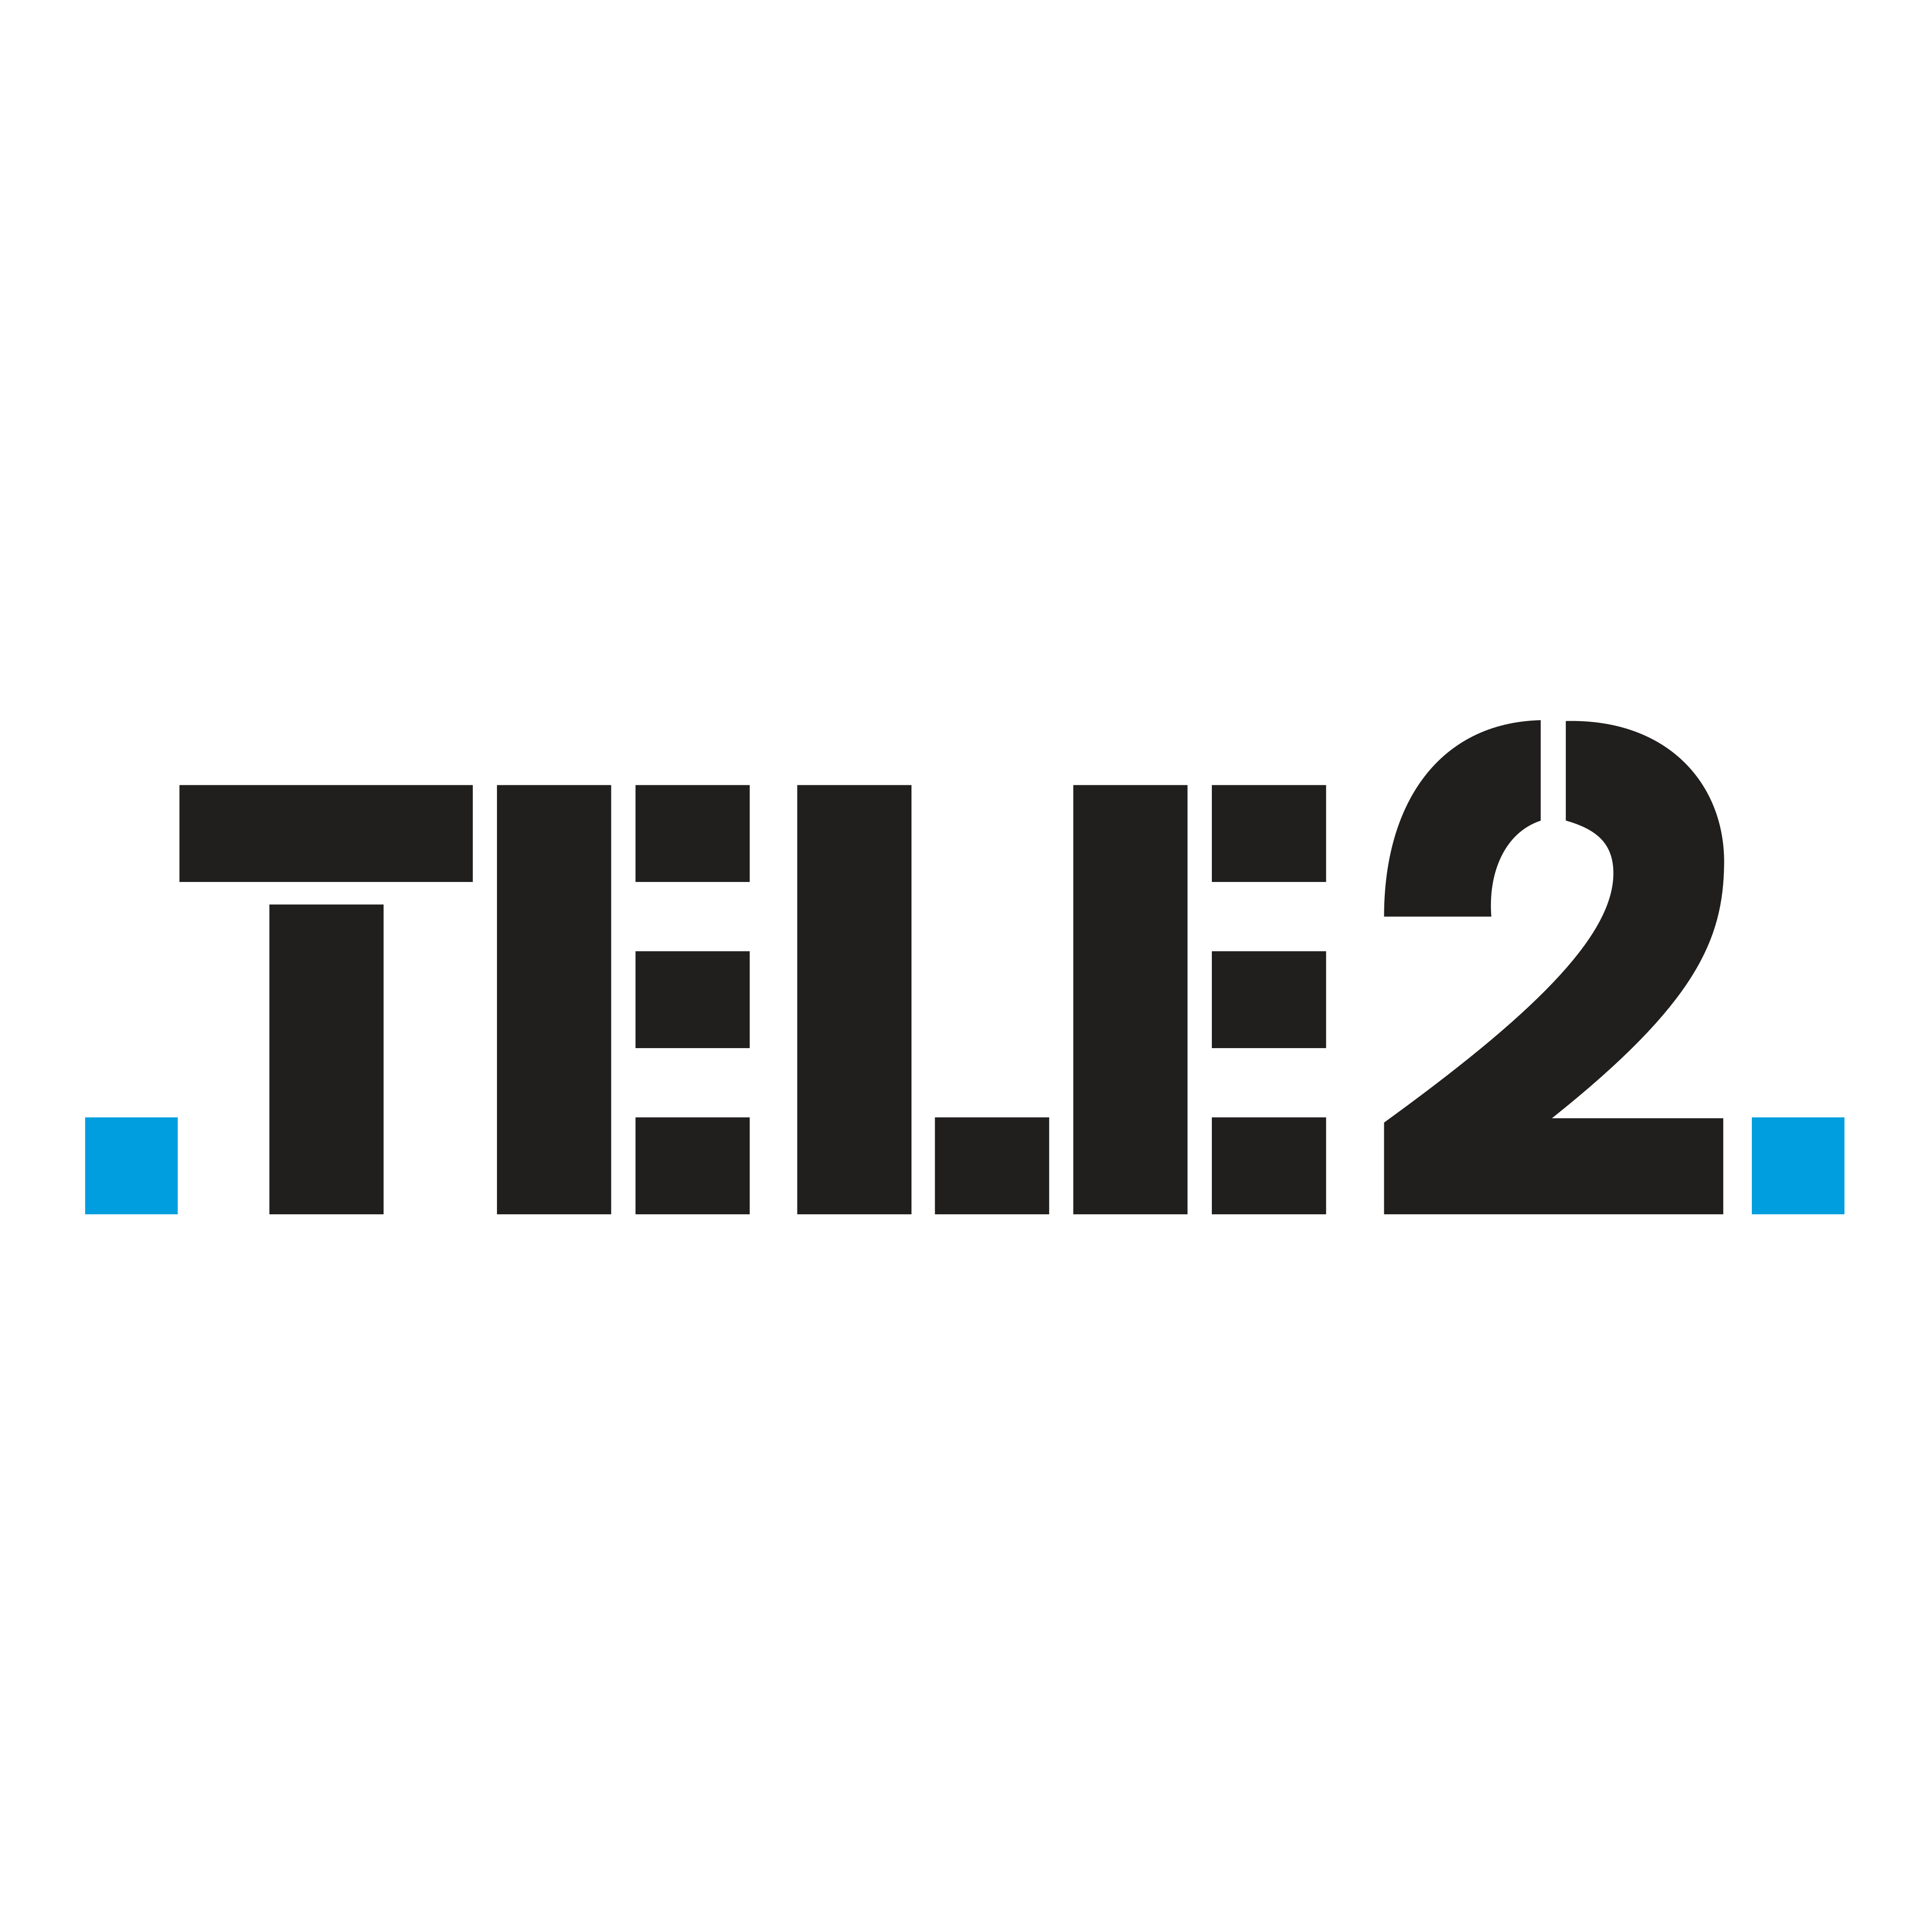 Фирменный знак теле2. Лого теле2 т2. Логотип оператора теле2.